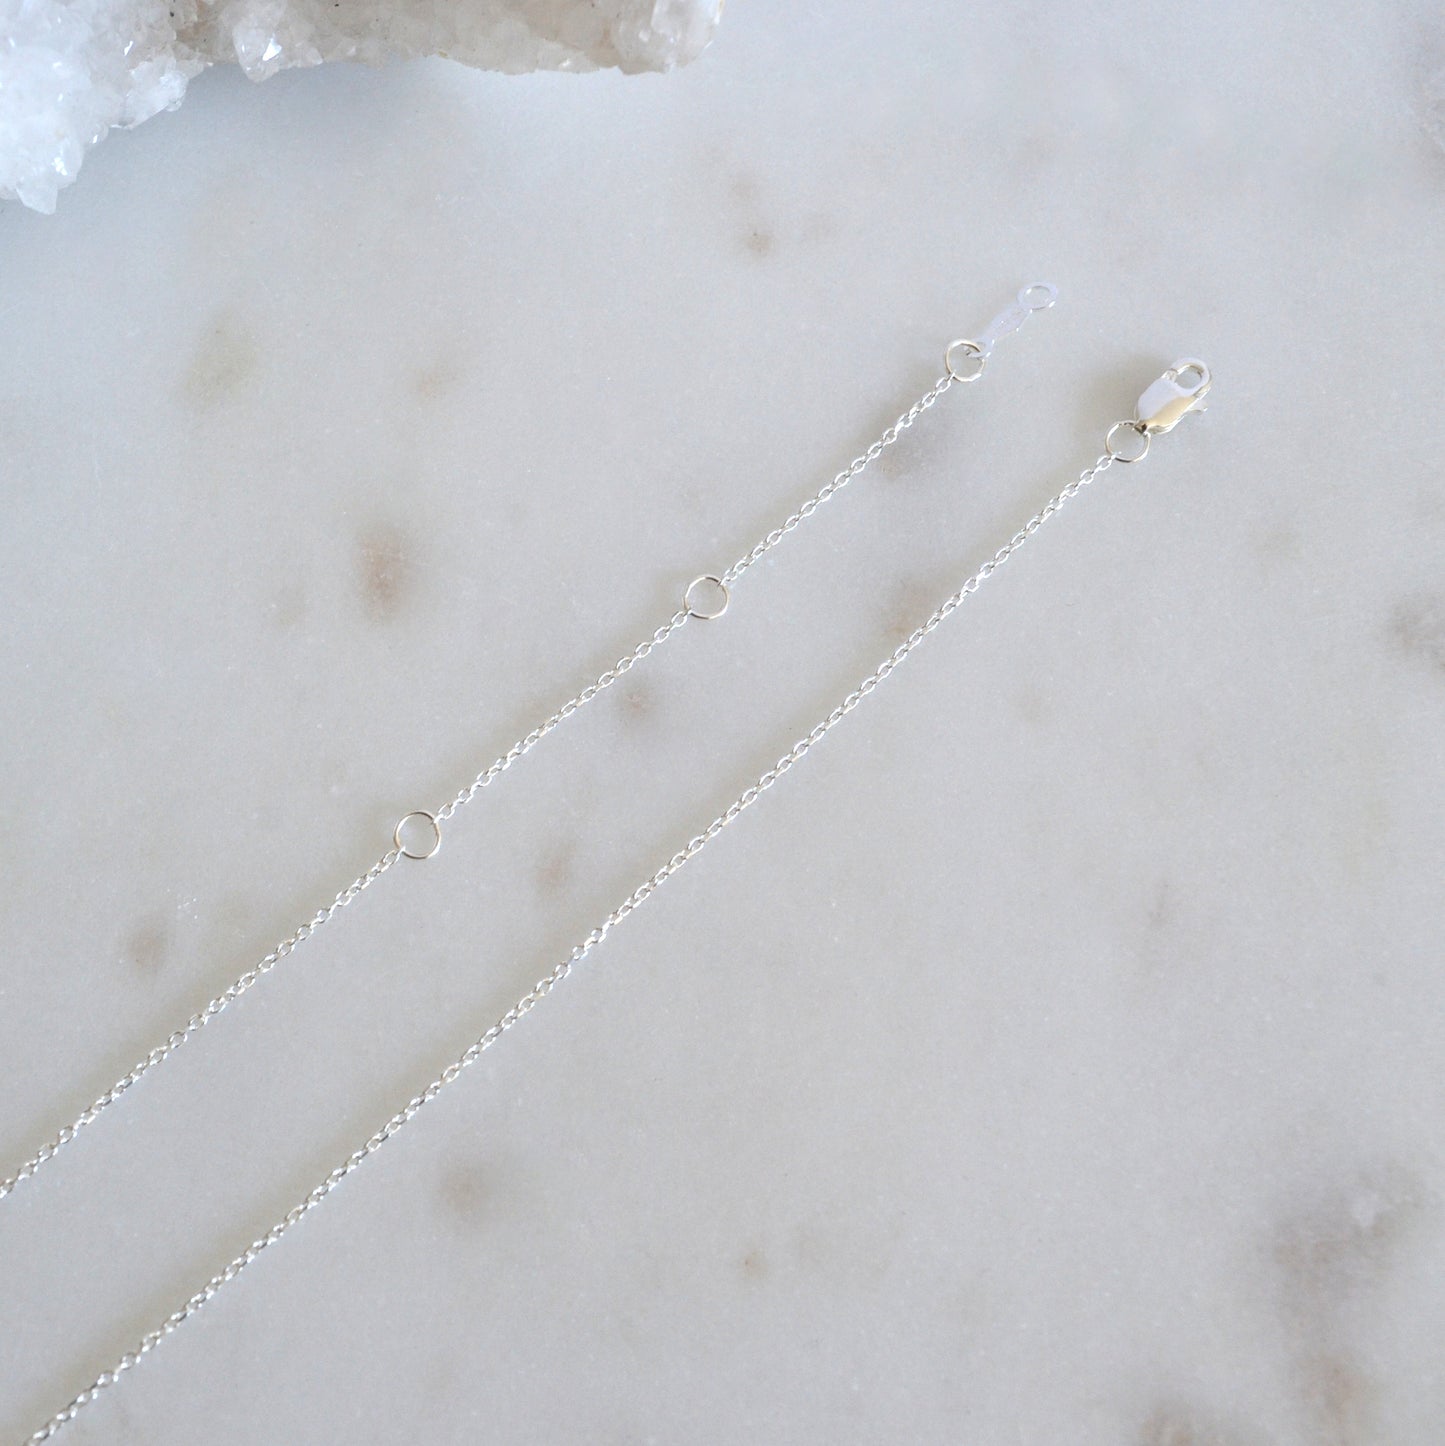 14k & Silver Opal Necklace